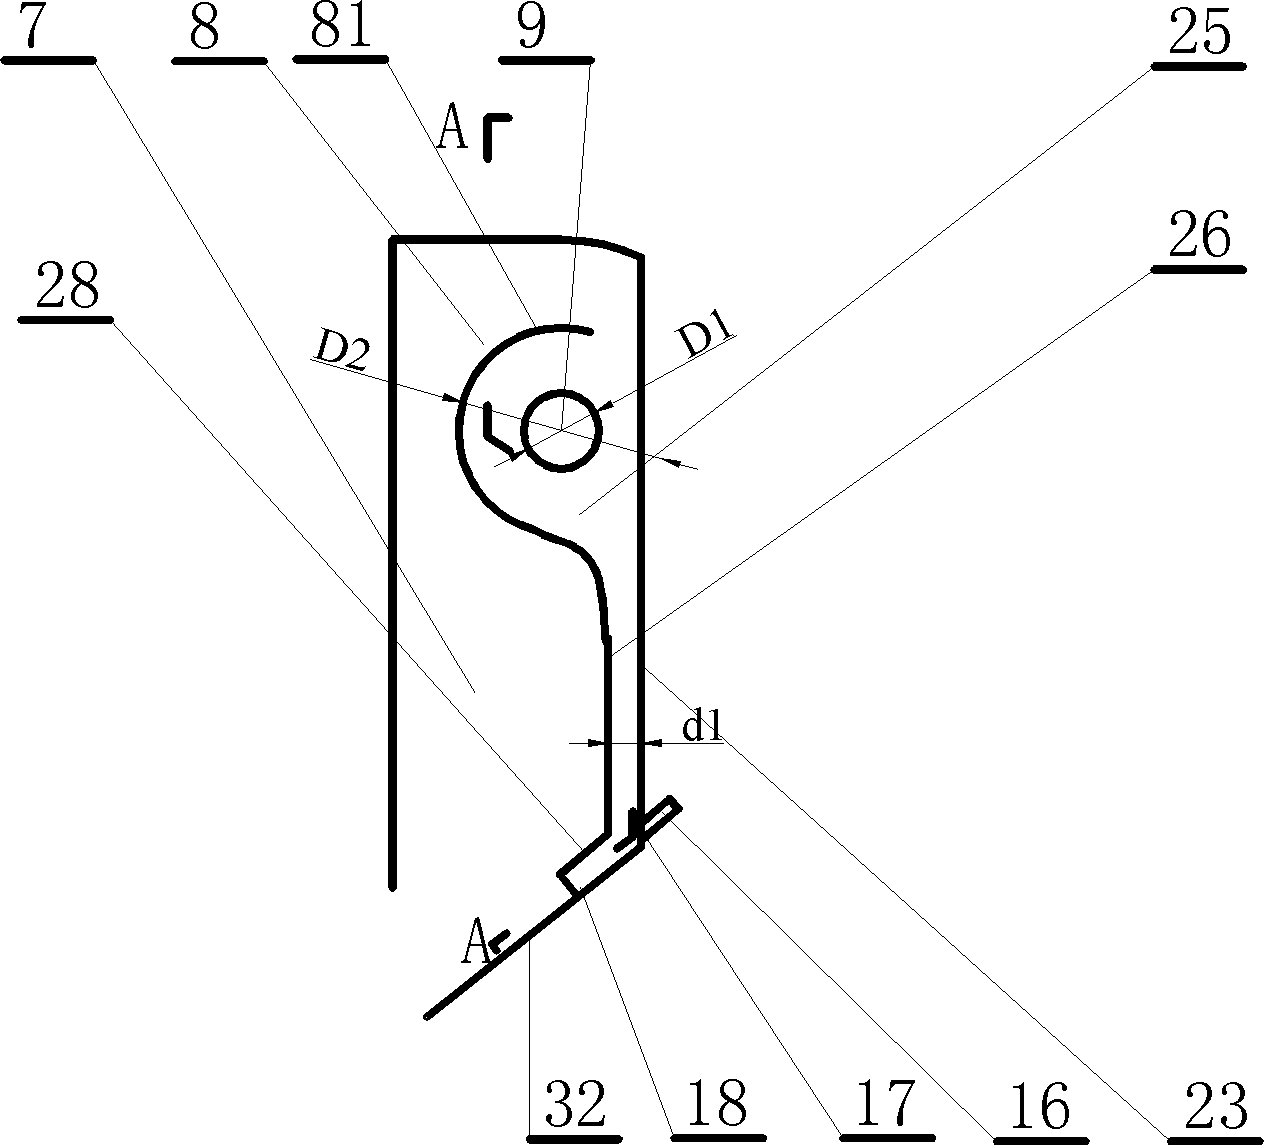 Horizontal type circulating fluidized bed boiler with horizontal cyclone separator